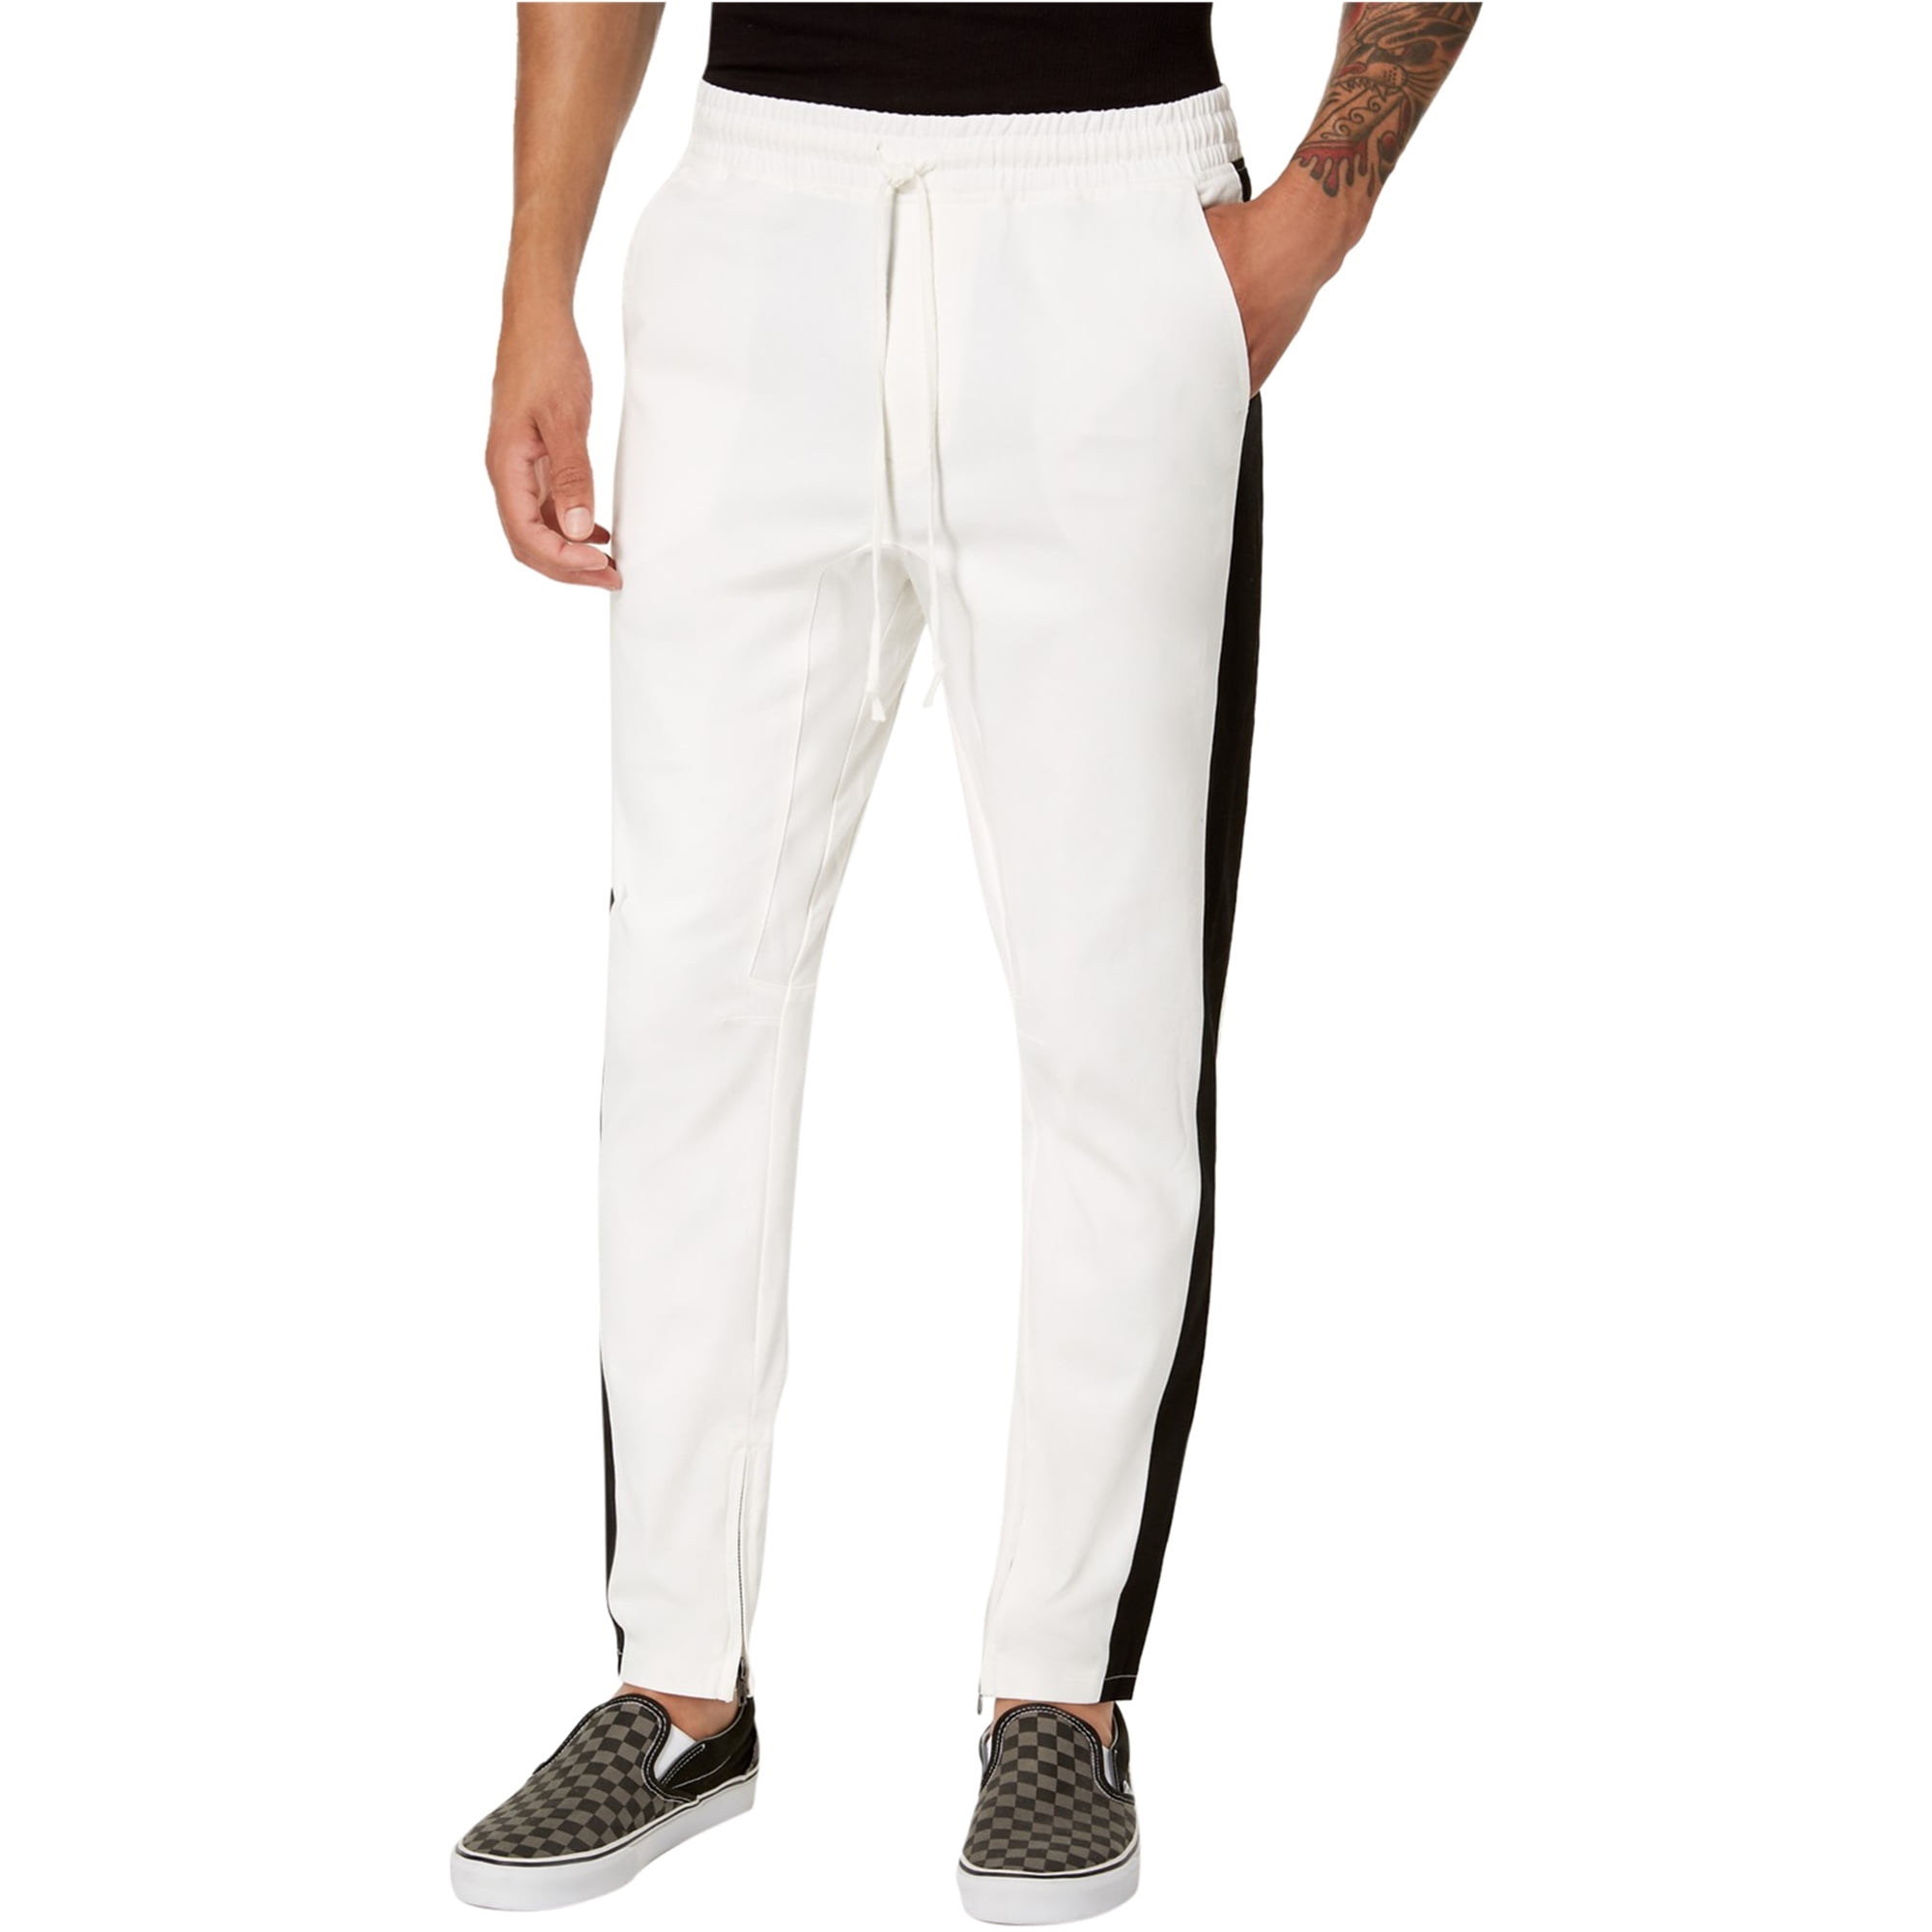 Jaywalker - Jaywalker Mens Side Striped Casual Trouser Pants, White ...